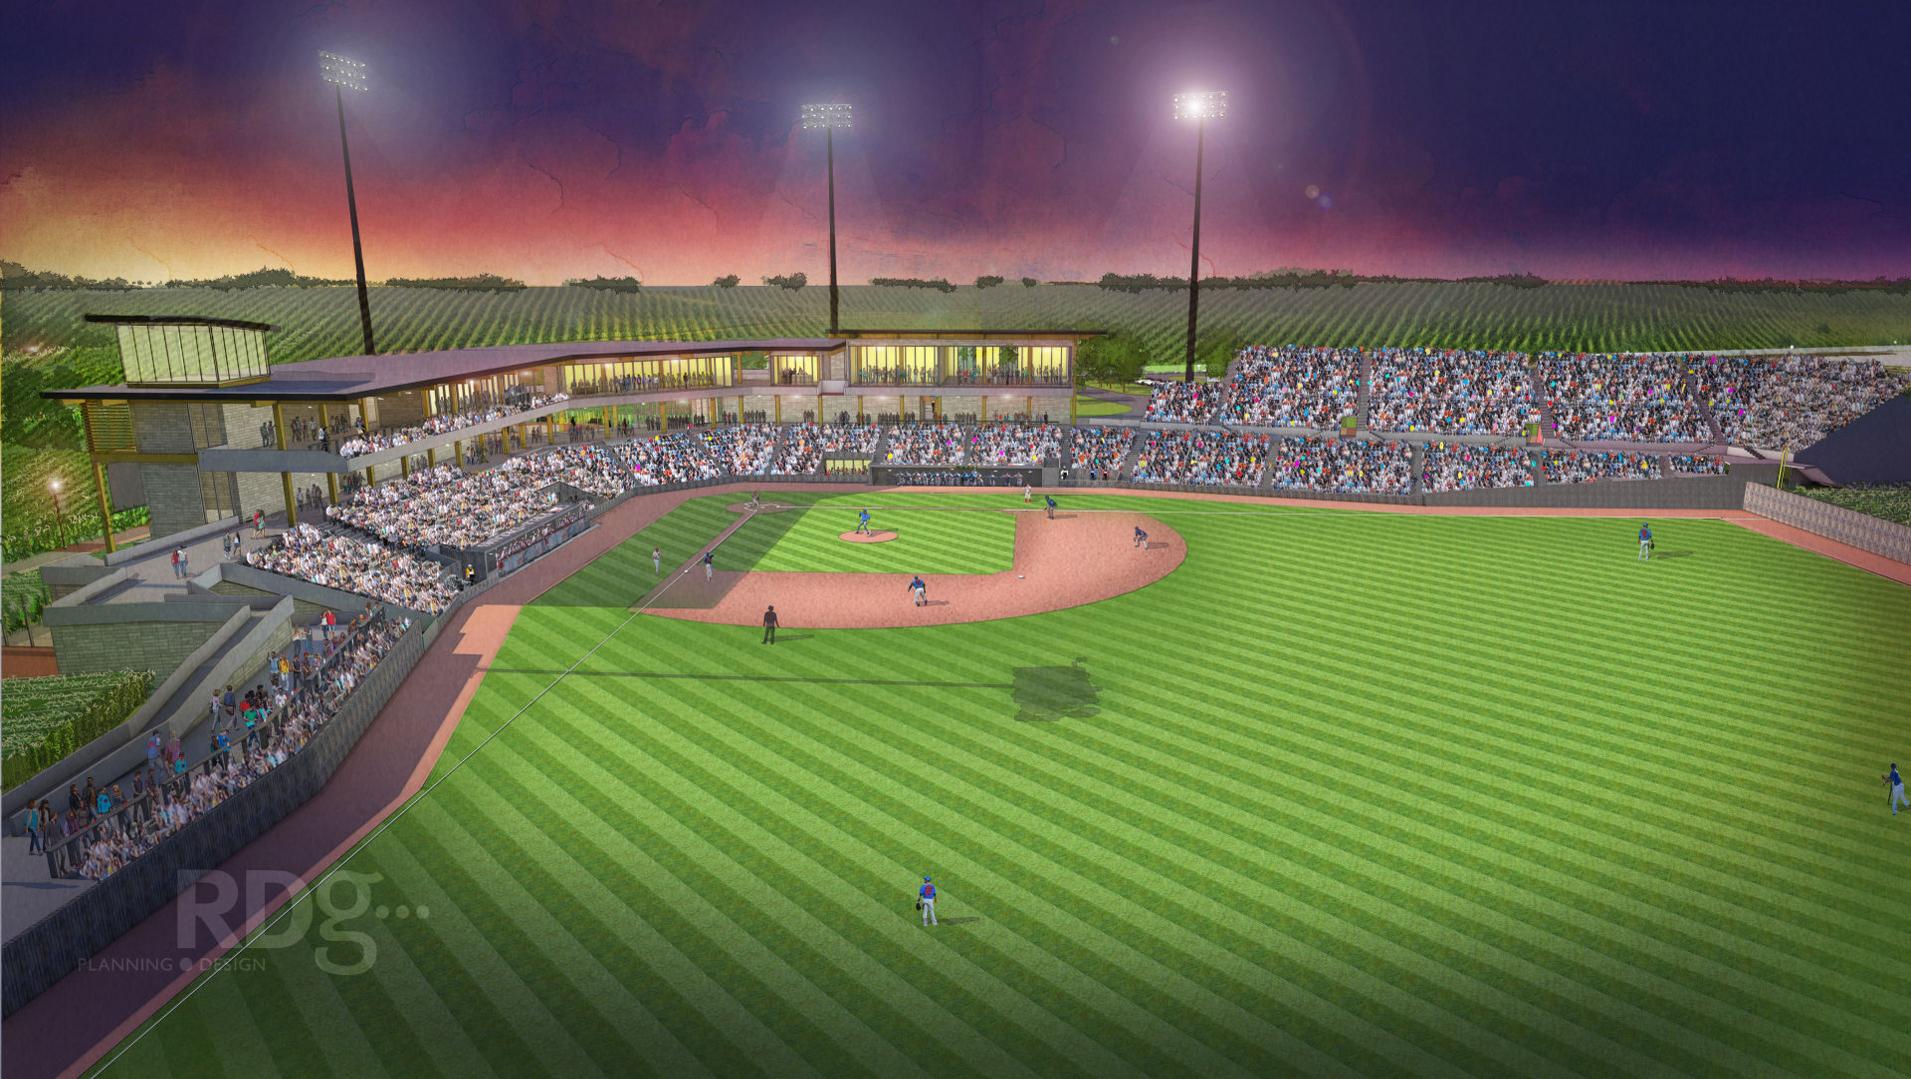 Tennessee baseball stadium renovation plans unveiled ahead of